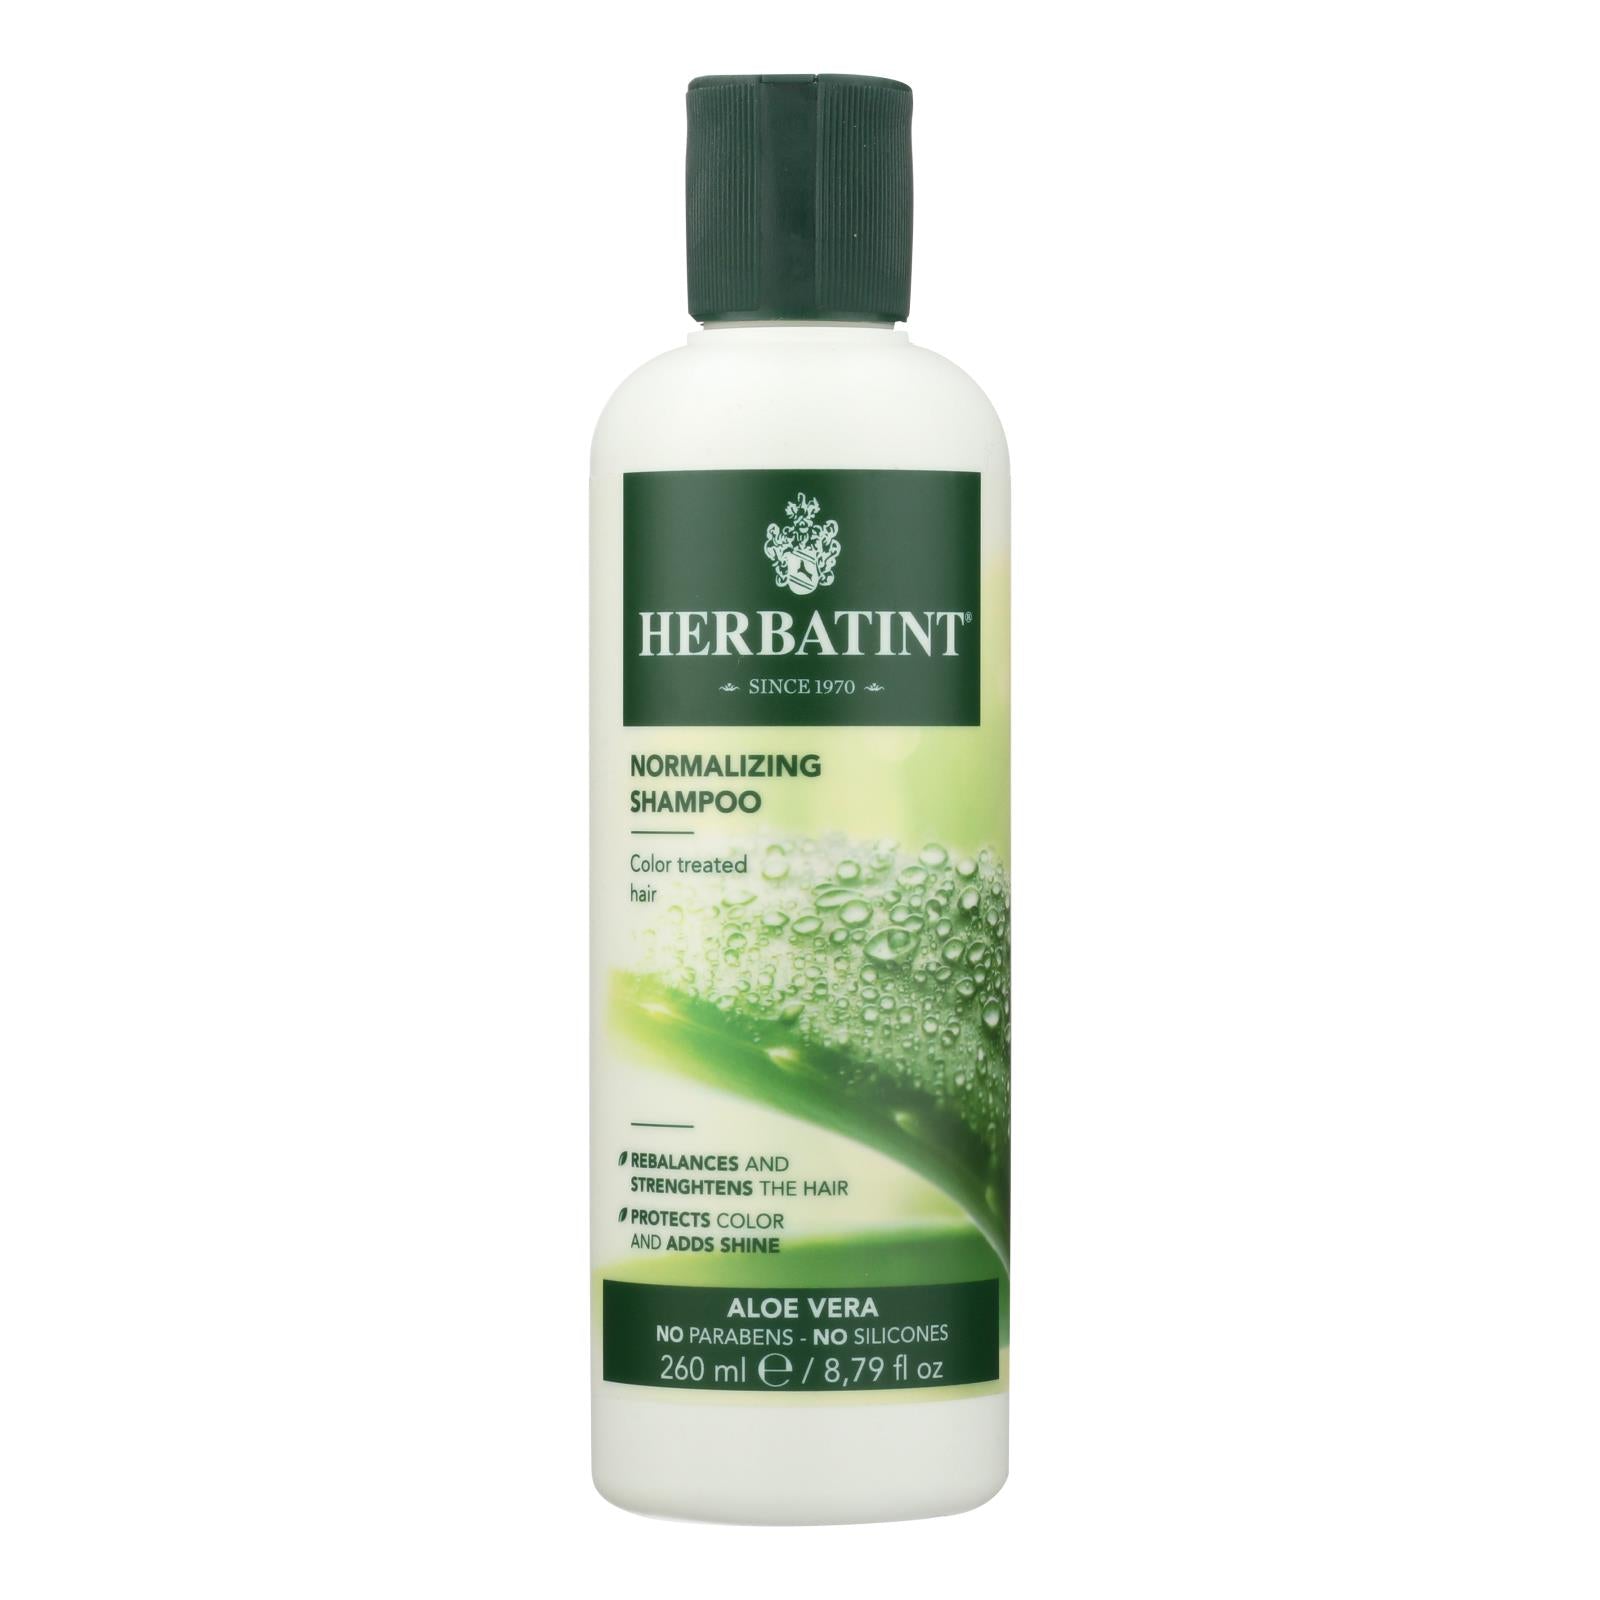 Herbatint Normalizing Shampoo